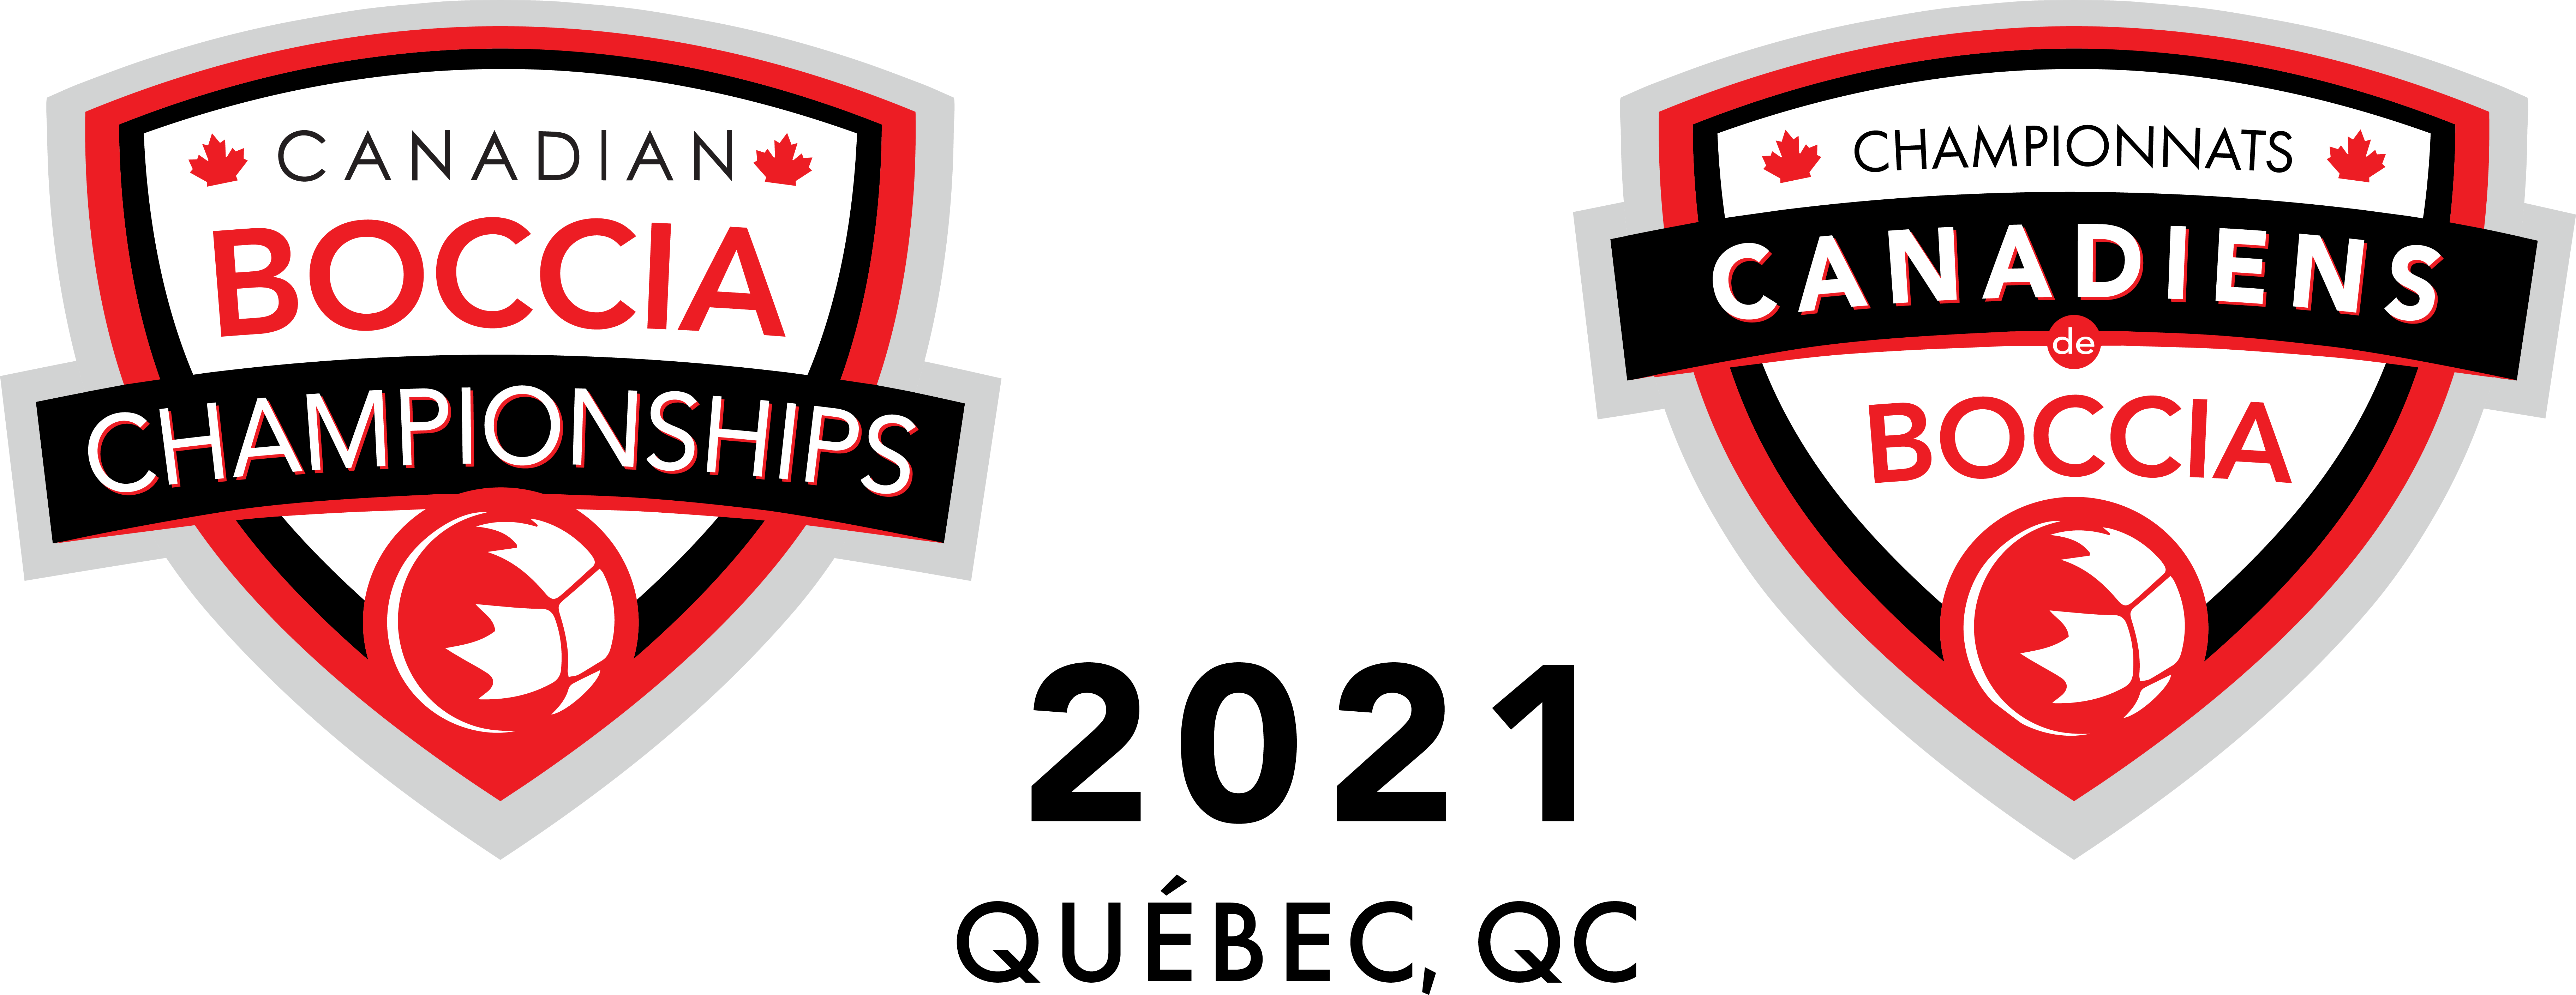 2021 Boccia Championships logo | 2021 Championnats de boccia logo